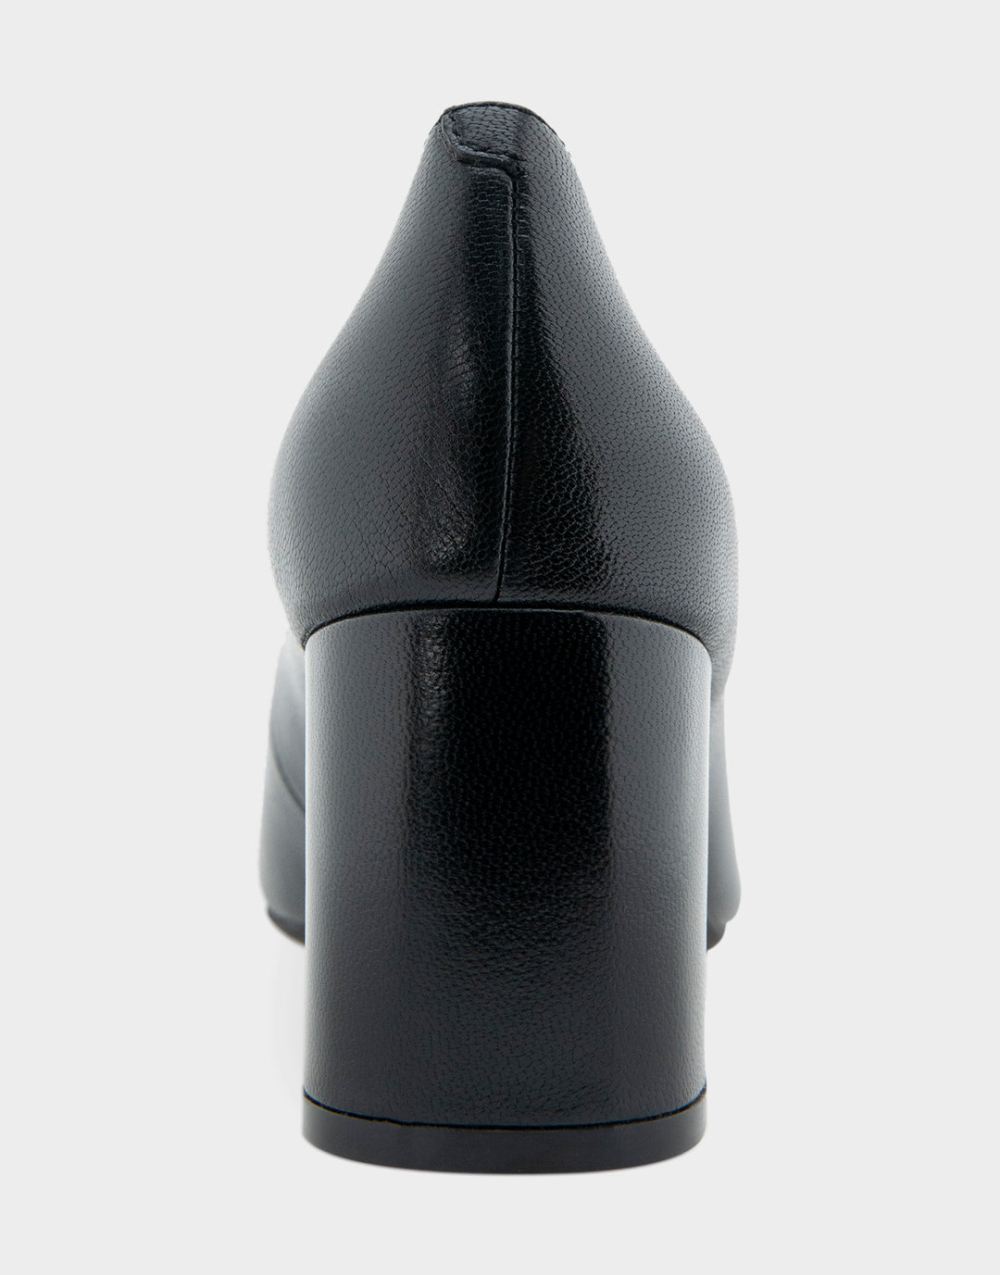 Women's | Minetta Black Leather Mid-Heel Pump